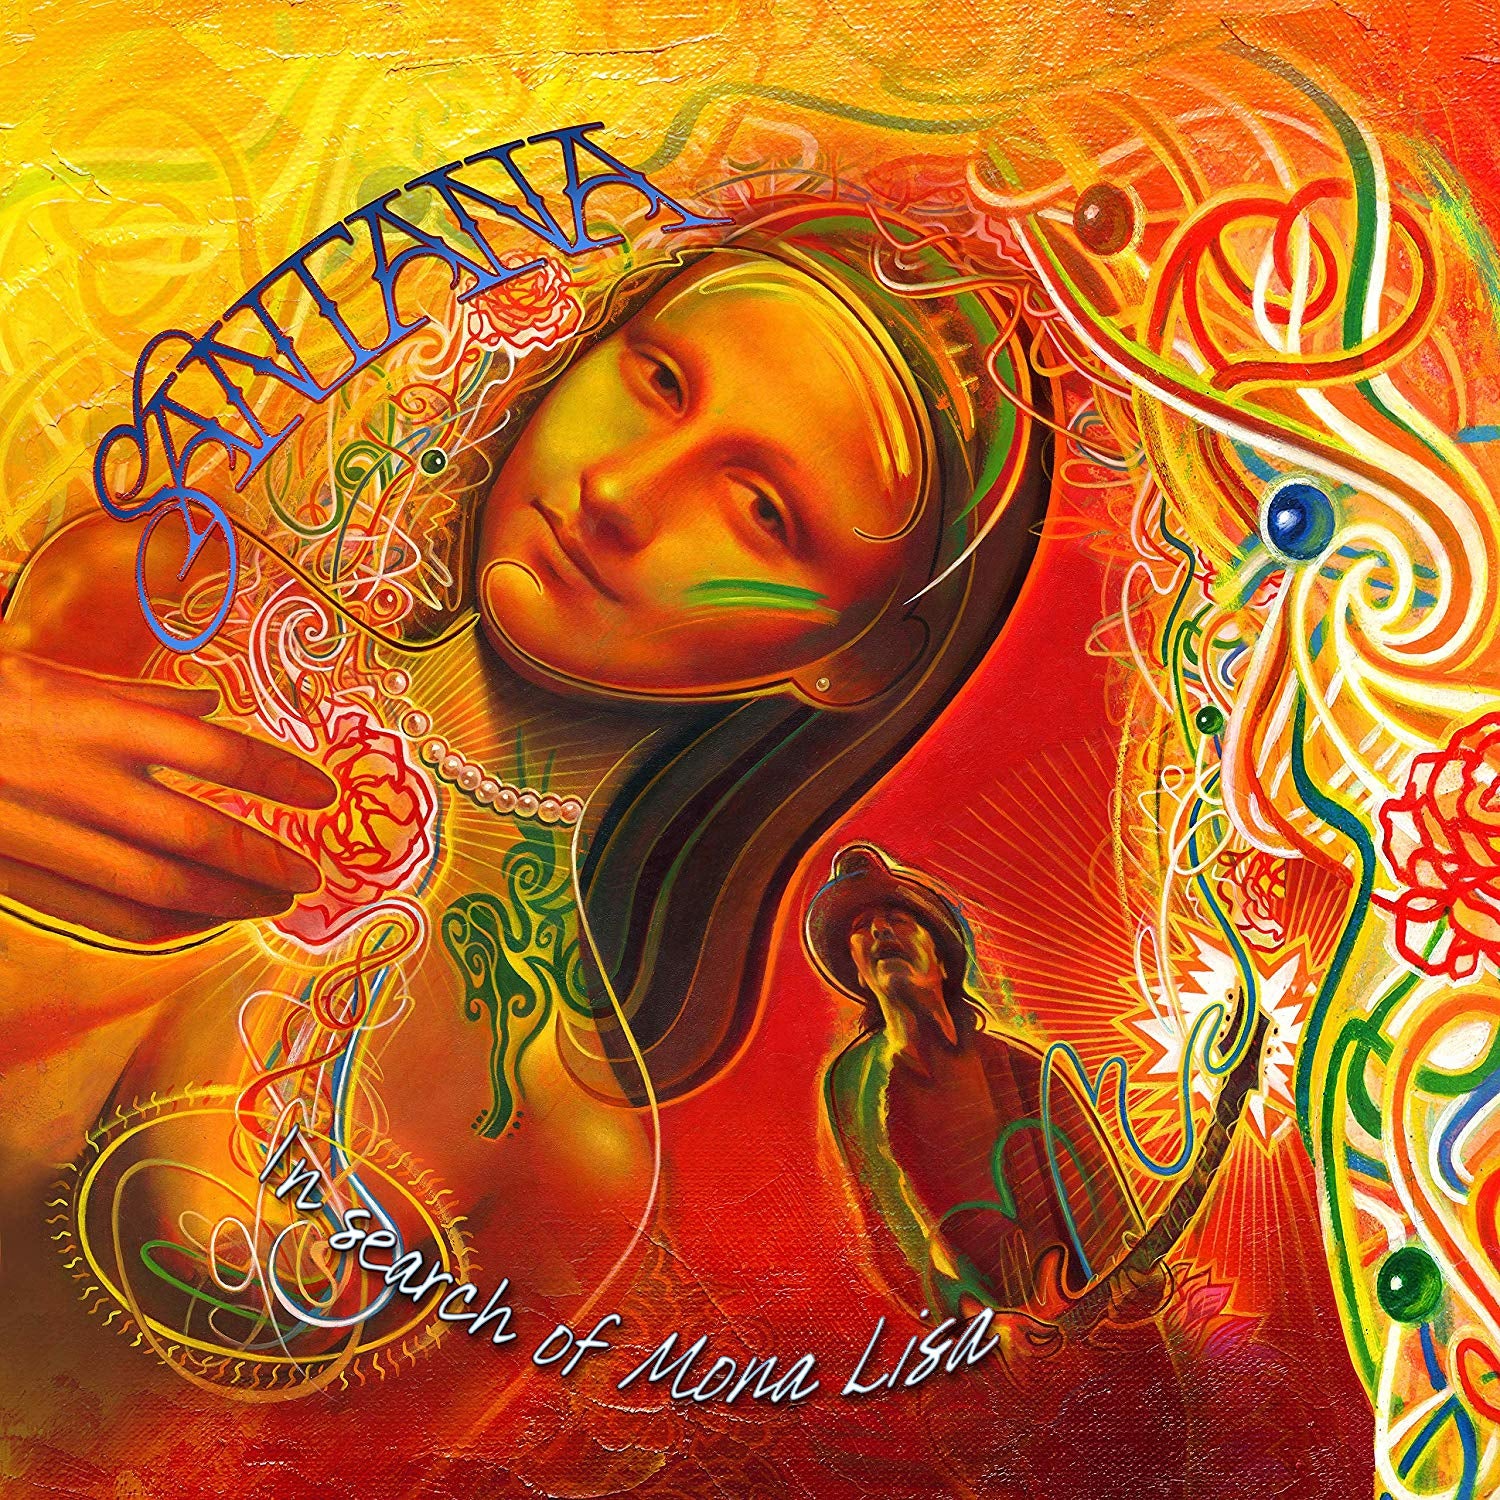 Santana In Search of Mona Lisa Vinyl